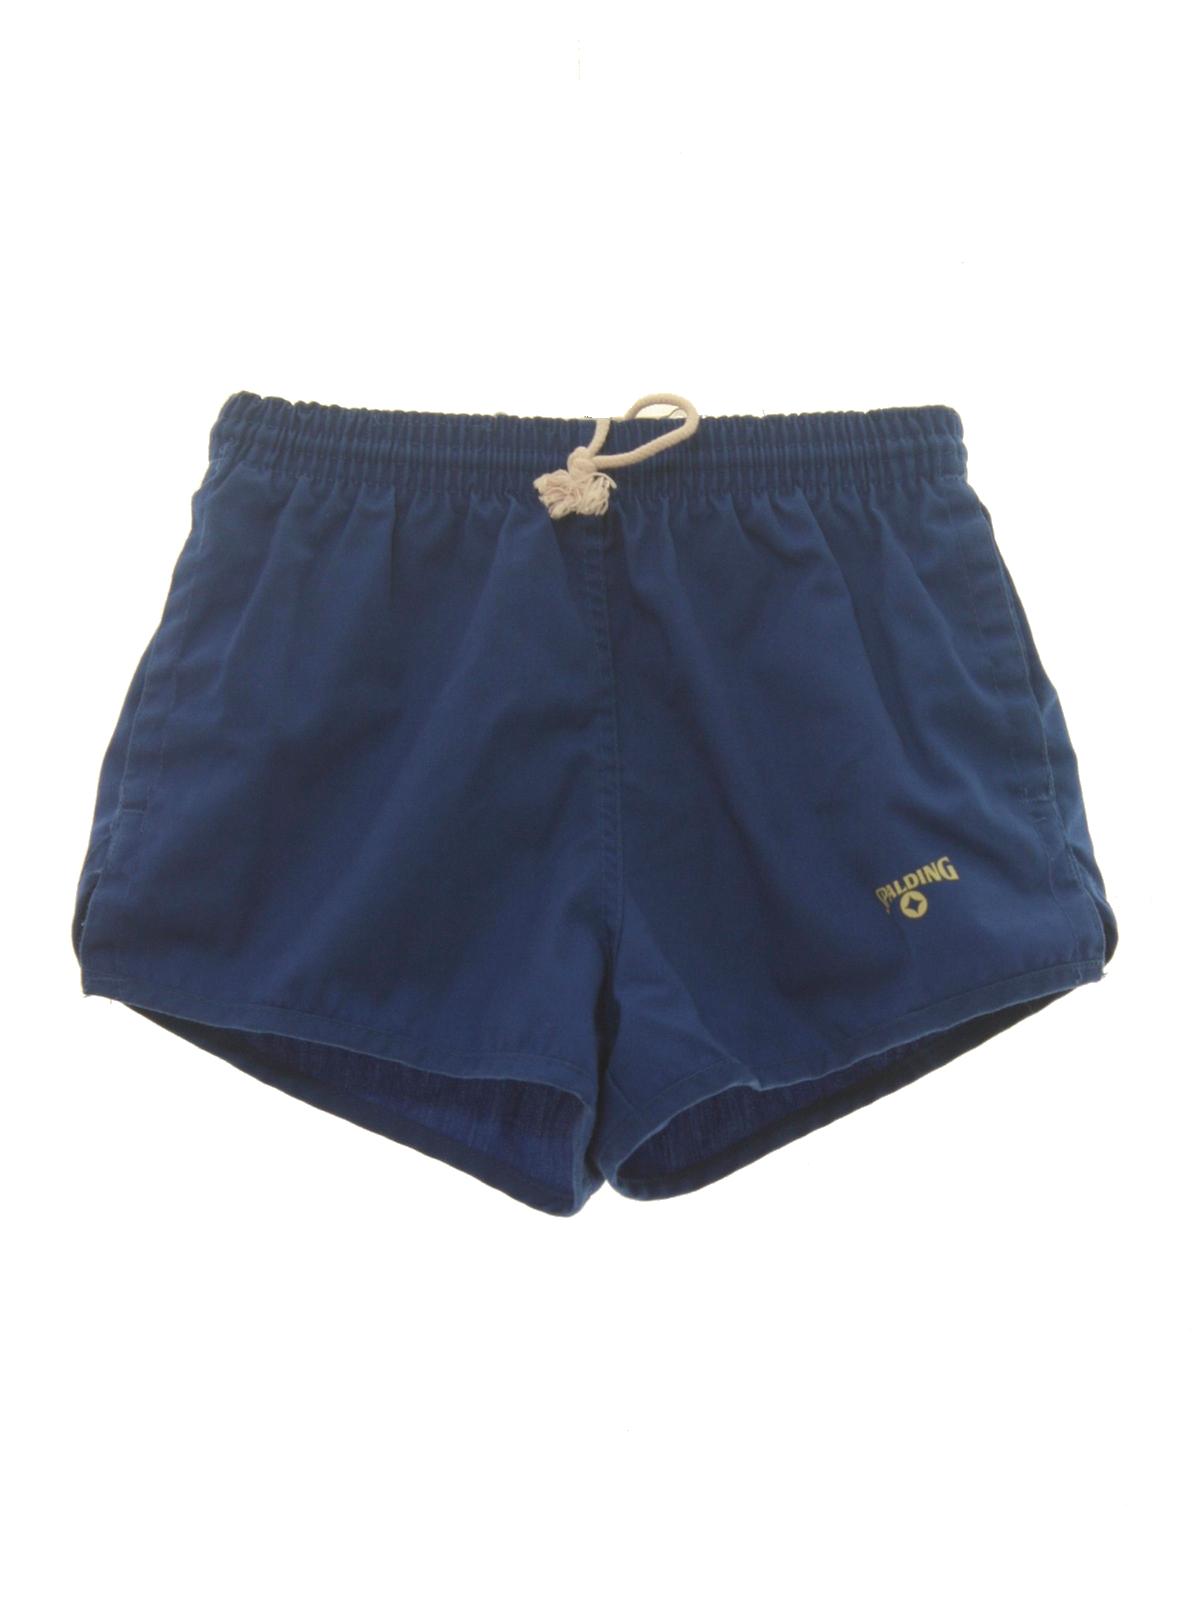 80's Spalding Shorts: 80s -Spalding- Mens royal blue background ...